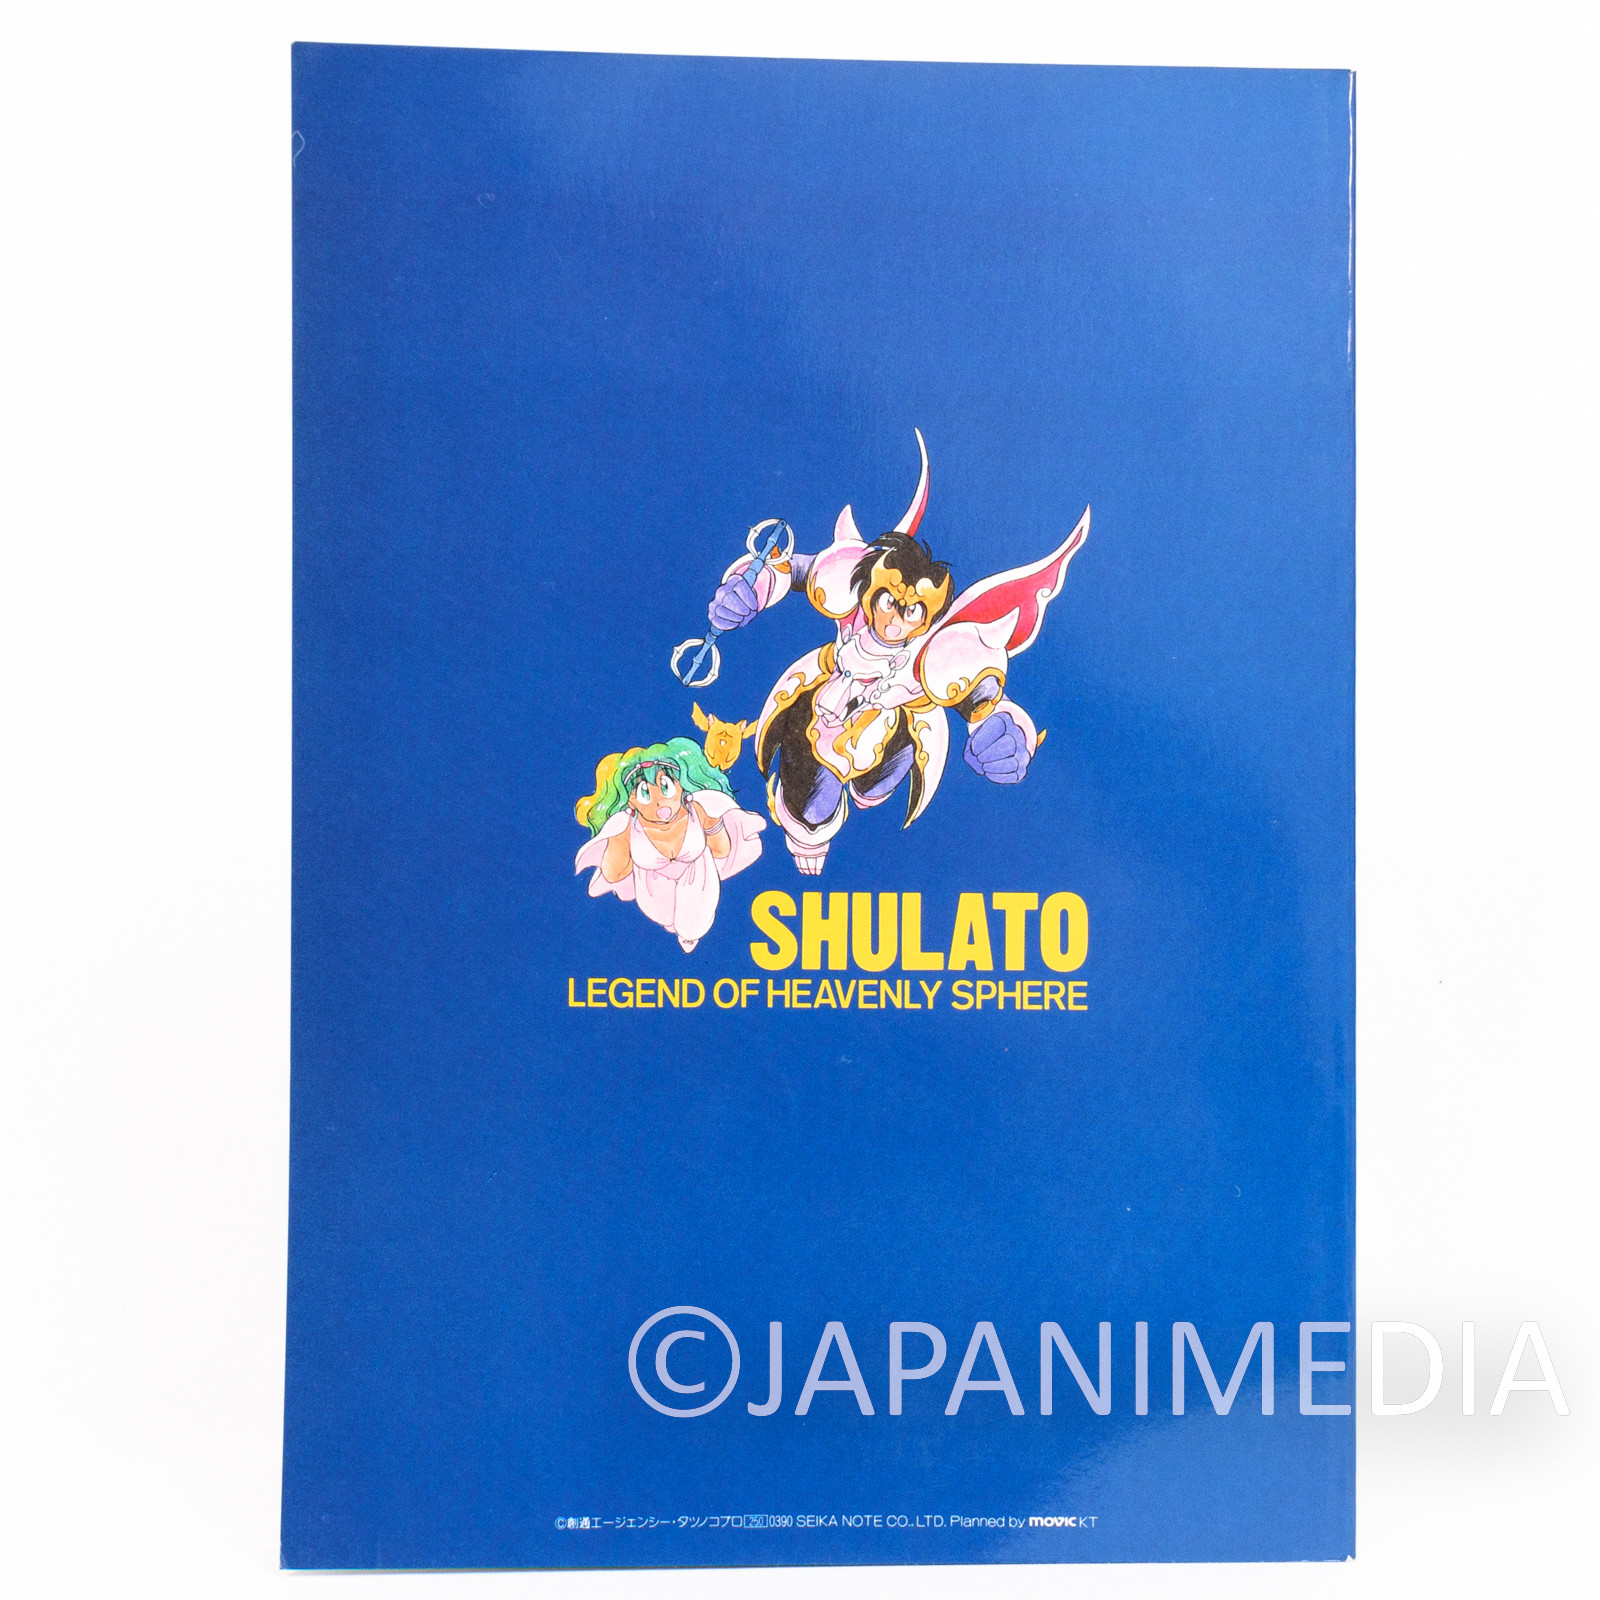 Legend of Heavenly Sphere Shurato Notebook Movic JAPAN ANIME MANGA